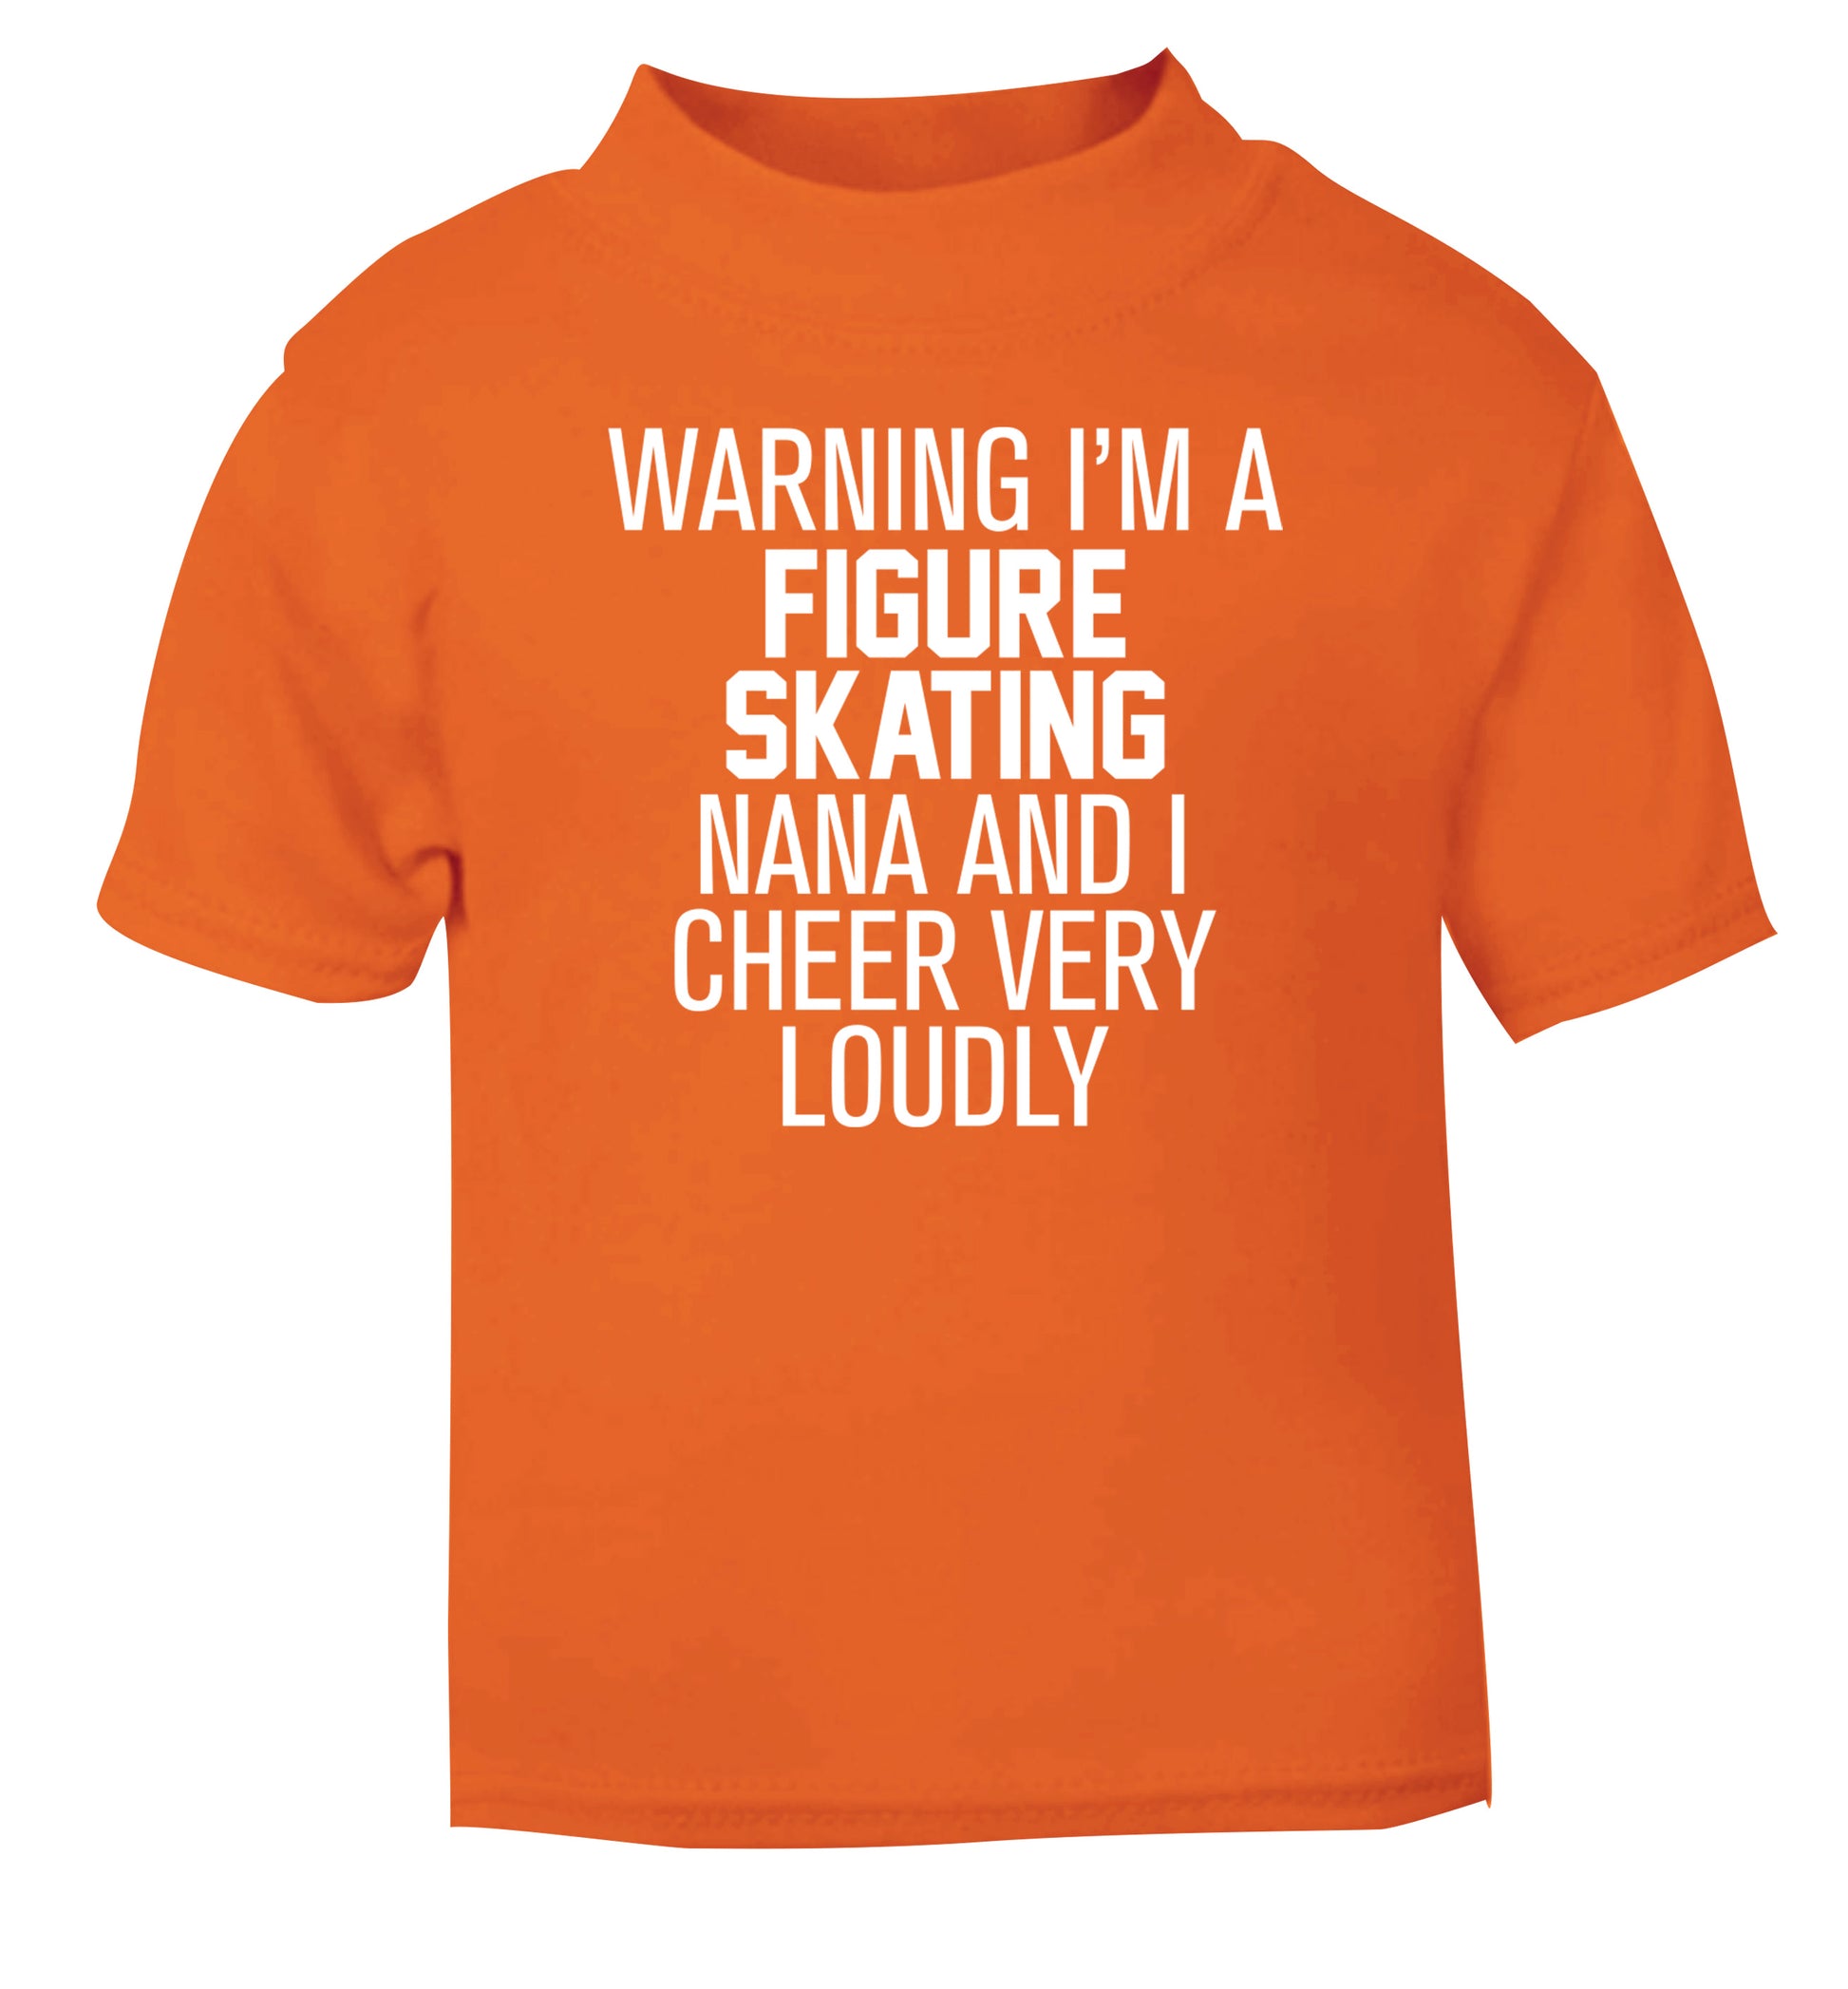 Warning I'm a figure skating nana and I cheer very loudly orange Baby Toddler Tshirt 2 Years